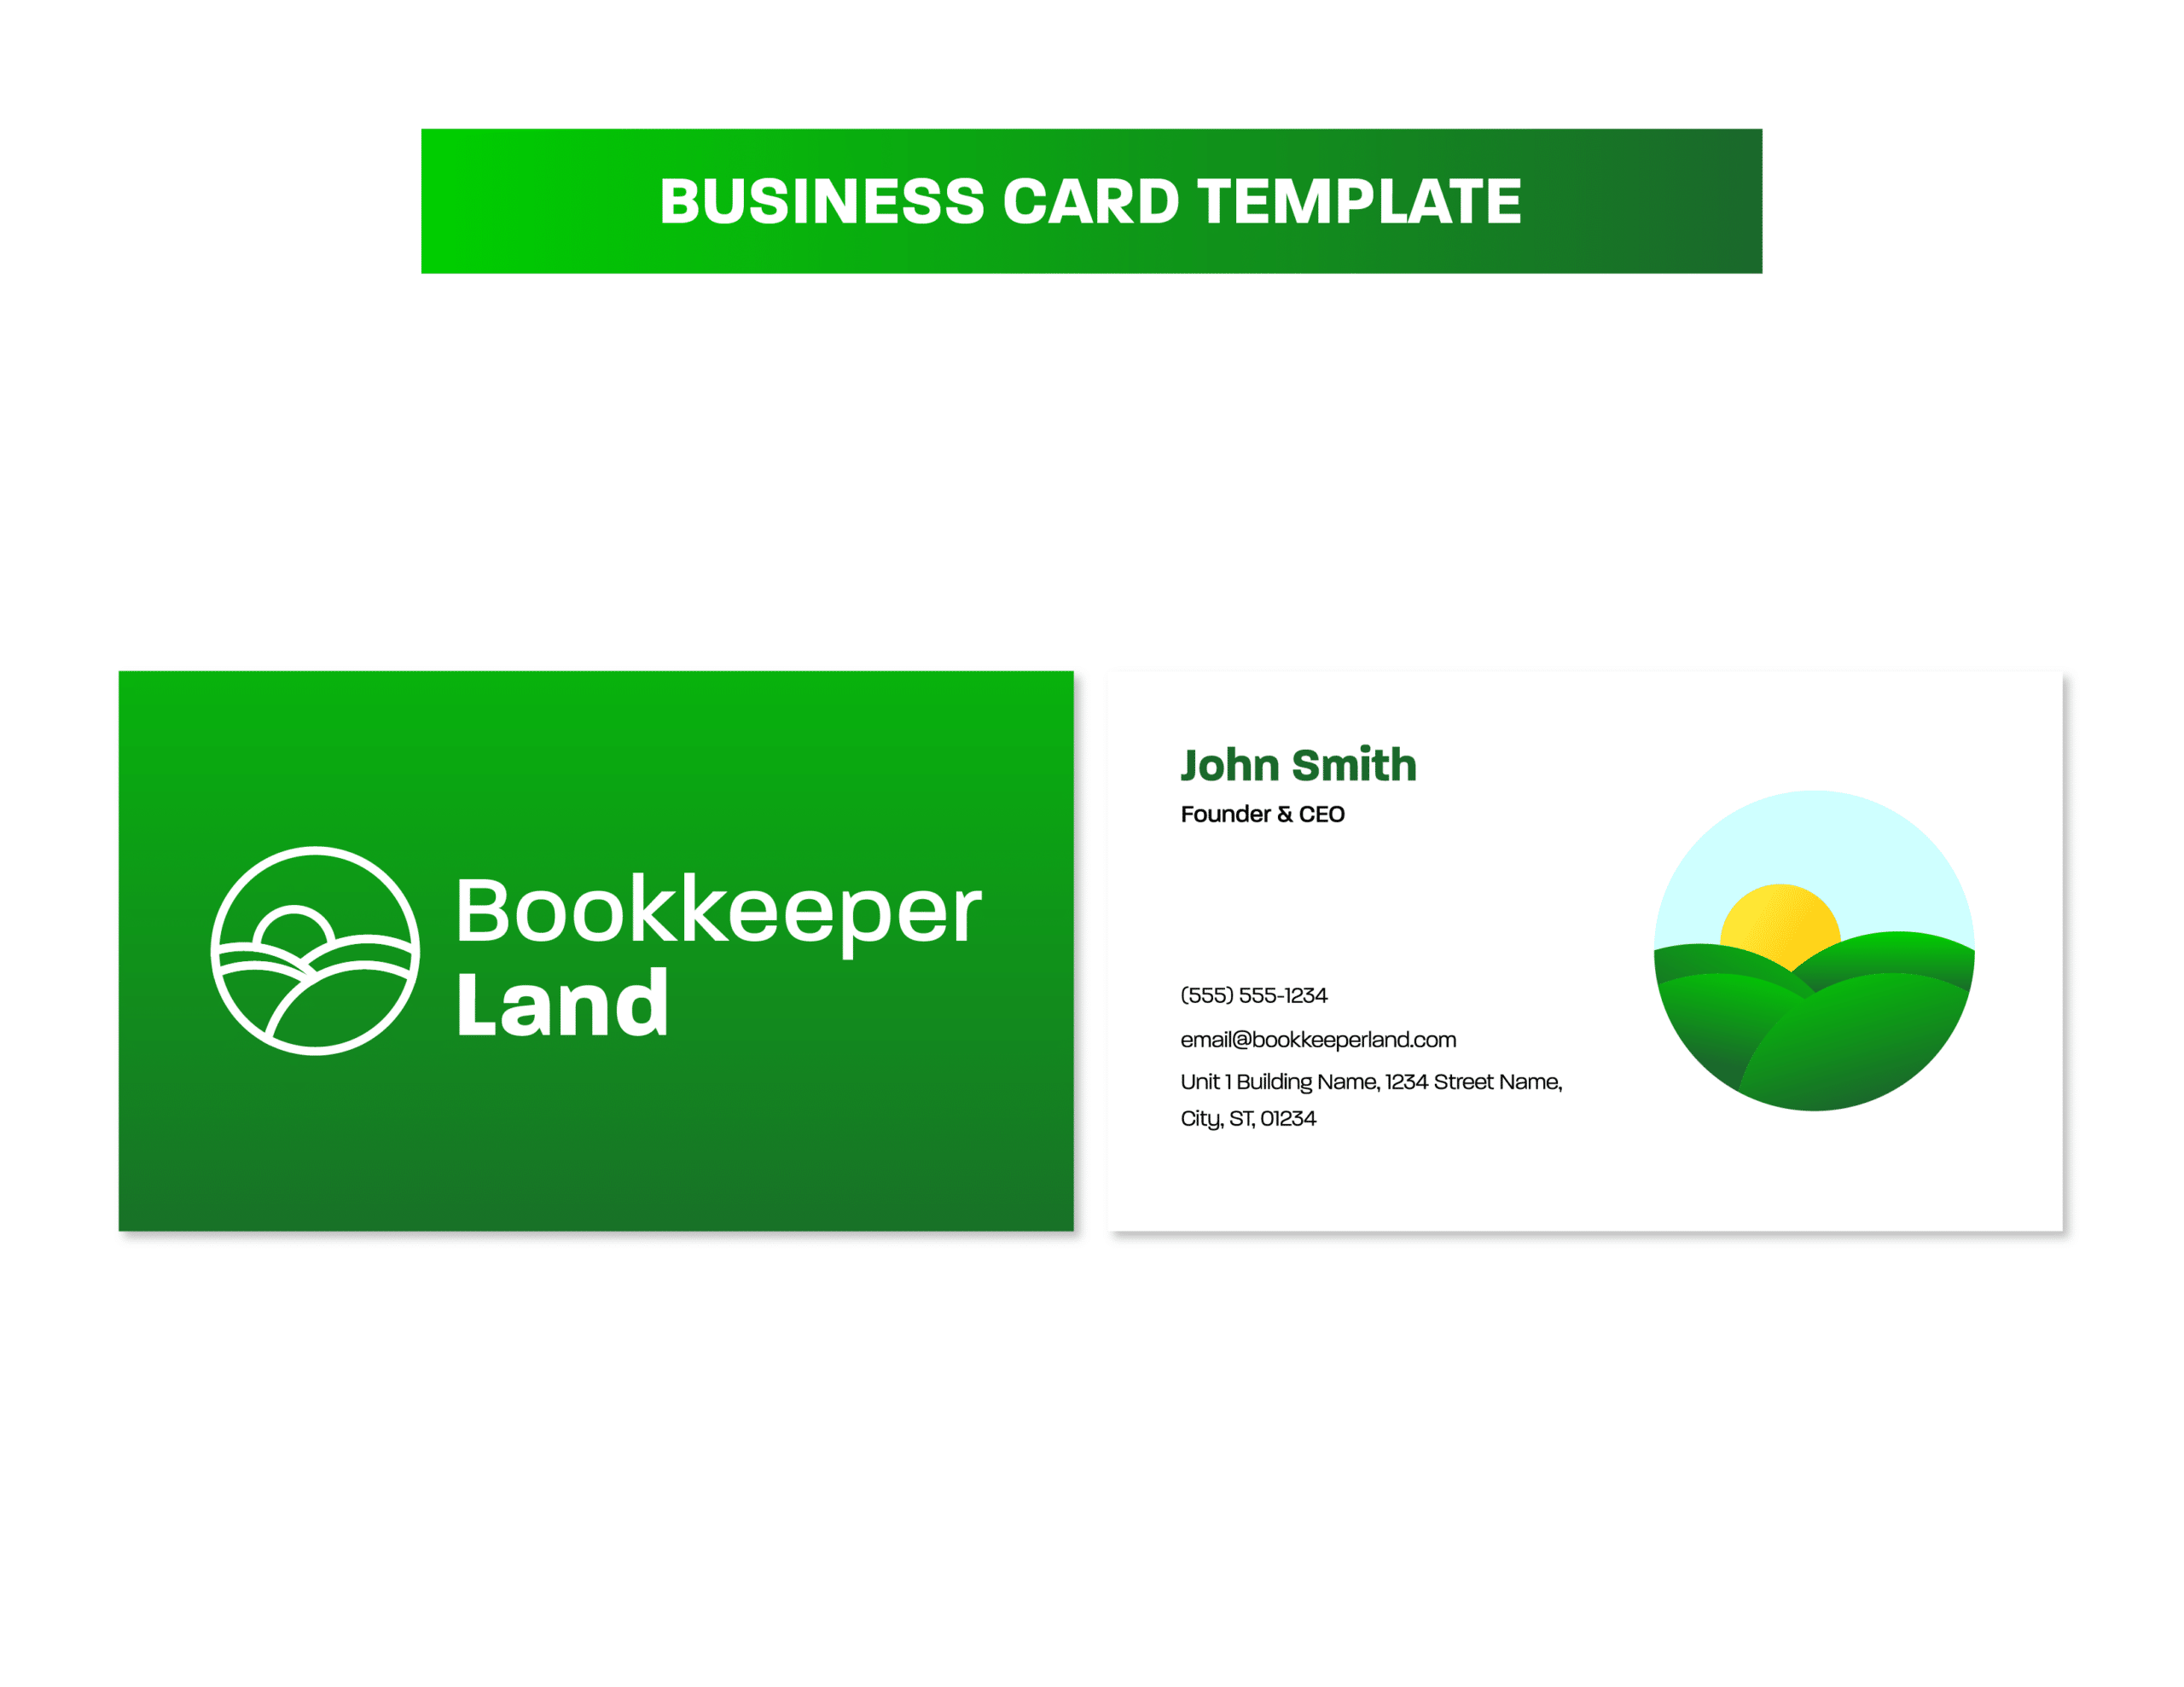 04BKLand_Showcase_Business Card Template